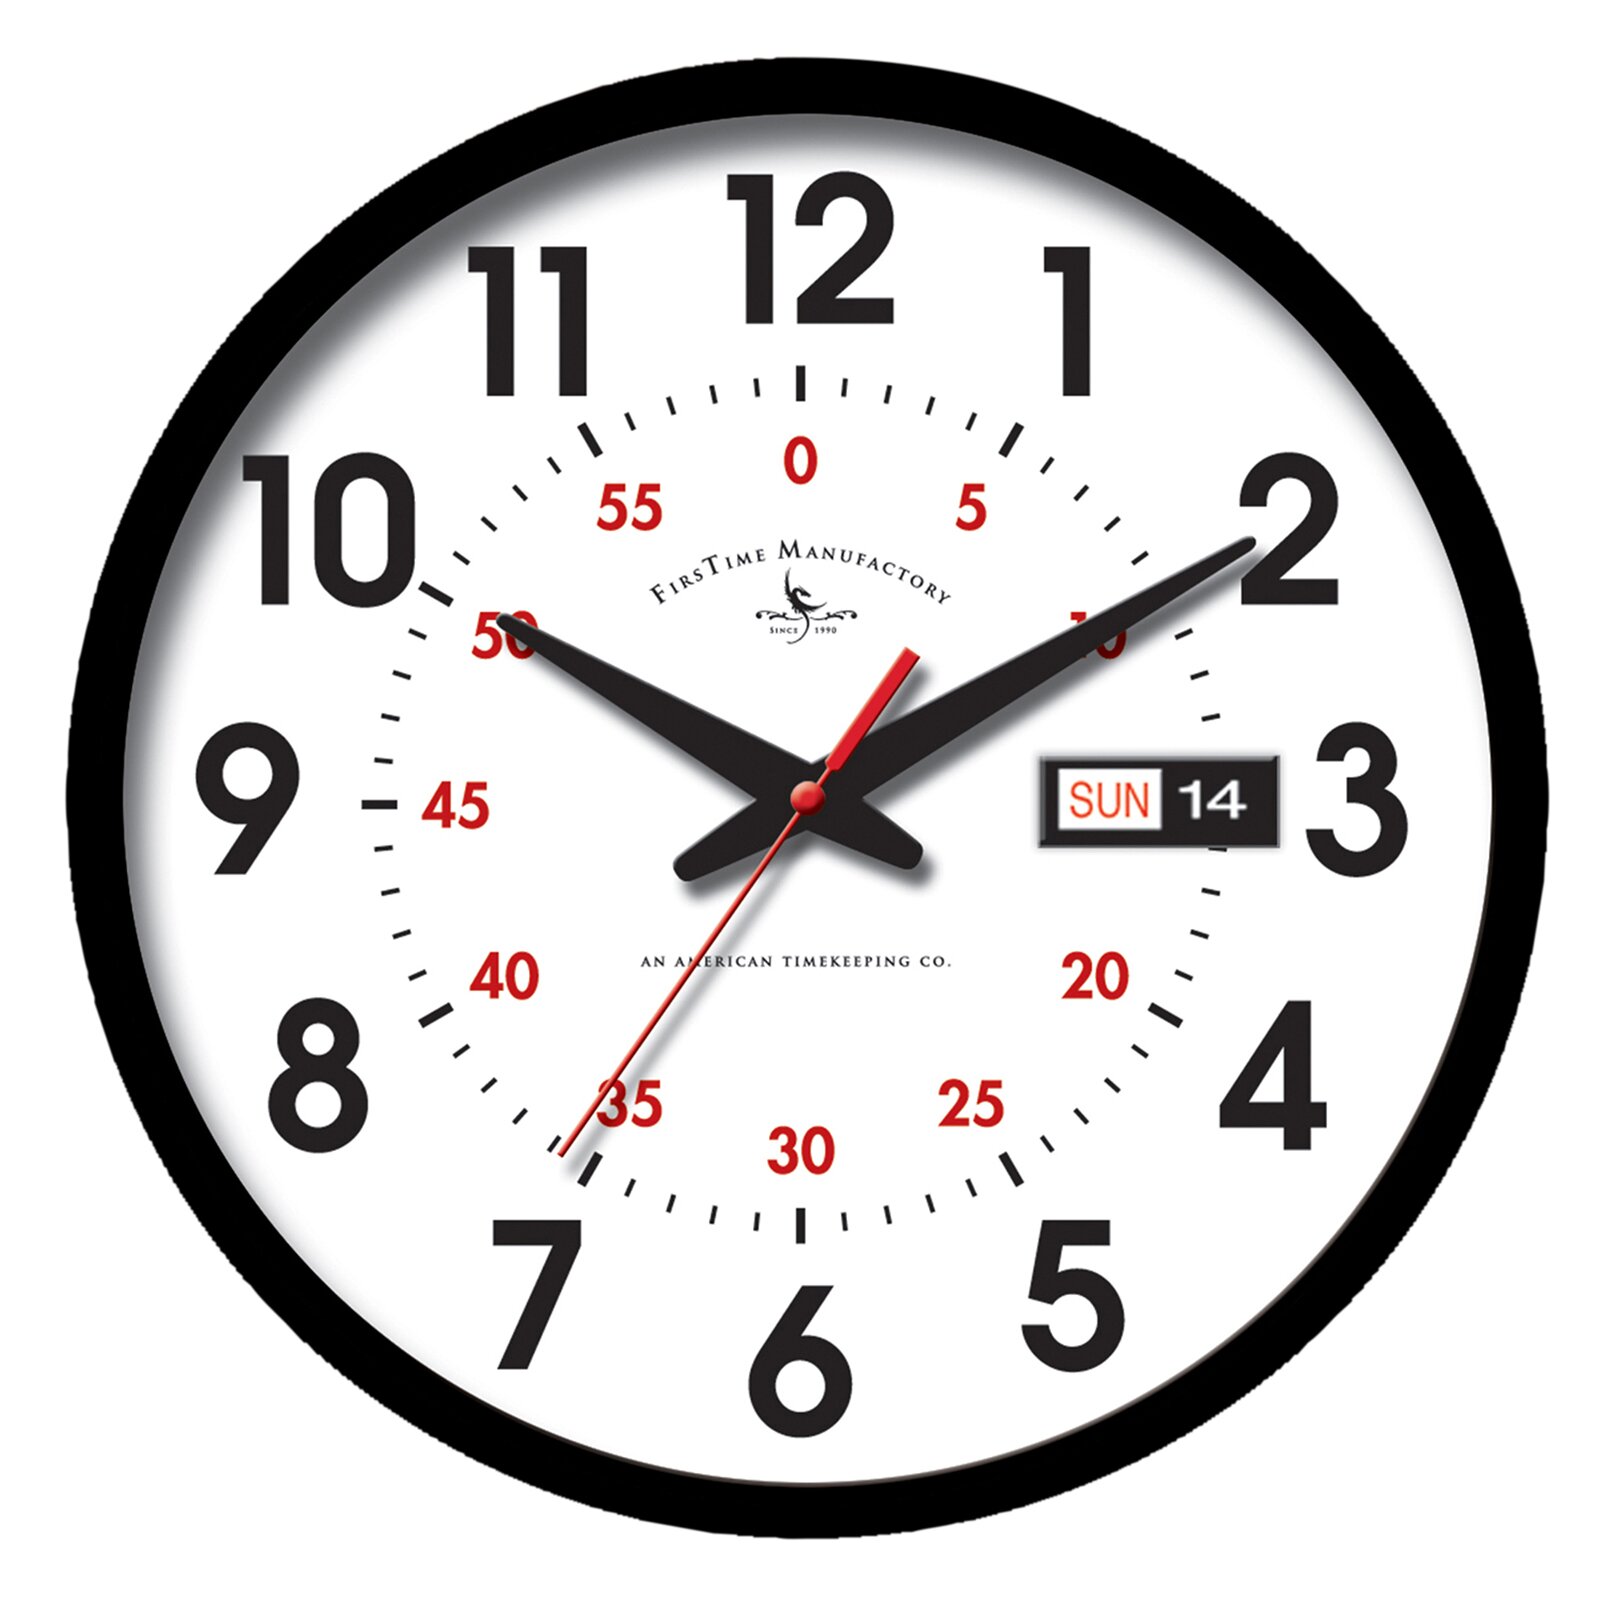 Время 14 51. 13:50 Часы. Часы и время. Стандартные часы. 13 Часов на часах.